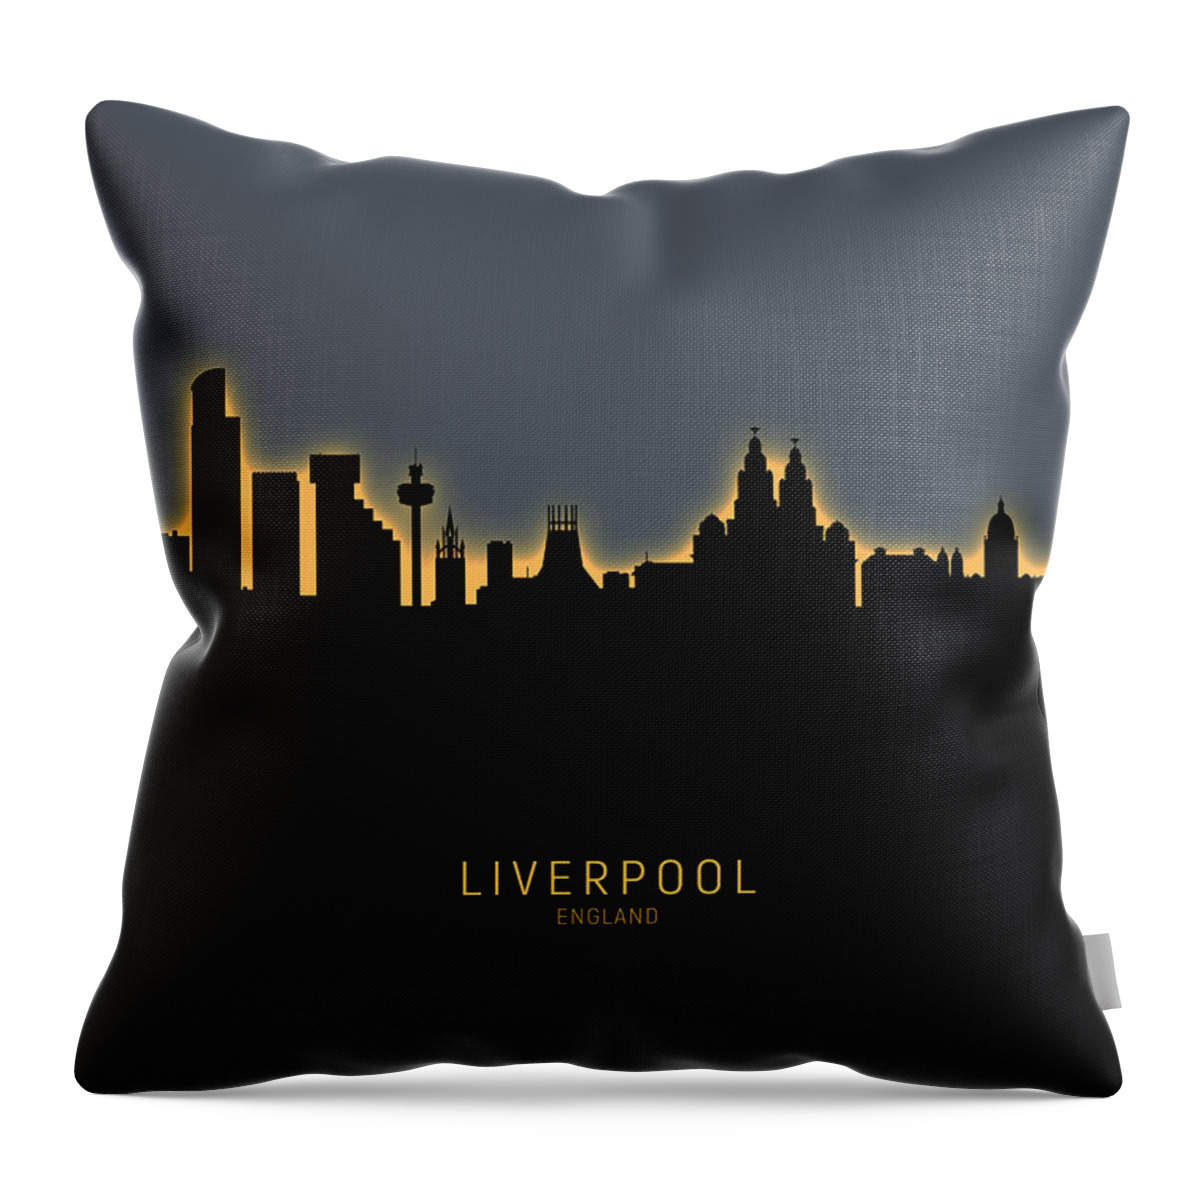 Liverpool Throw Pillow featuring the digital art Liverpool England Skyline #32 by Michael Tompsett